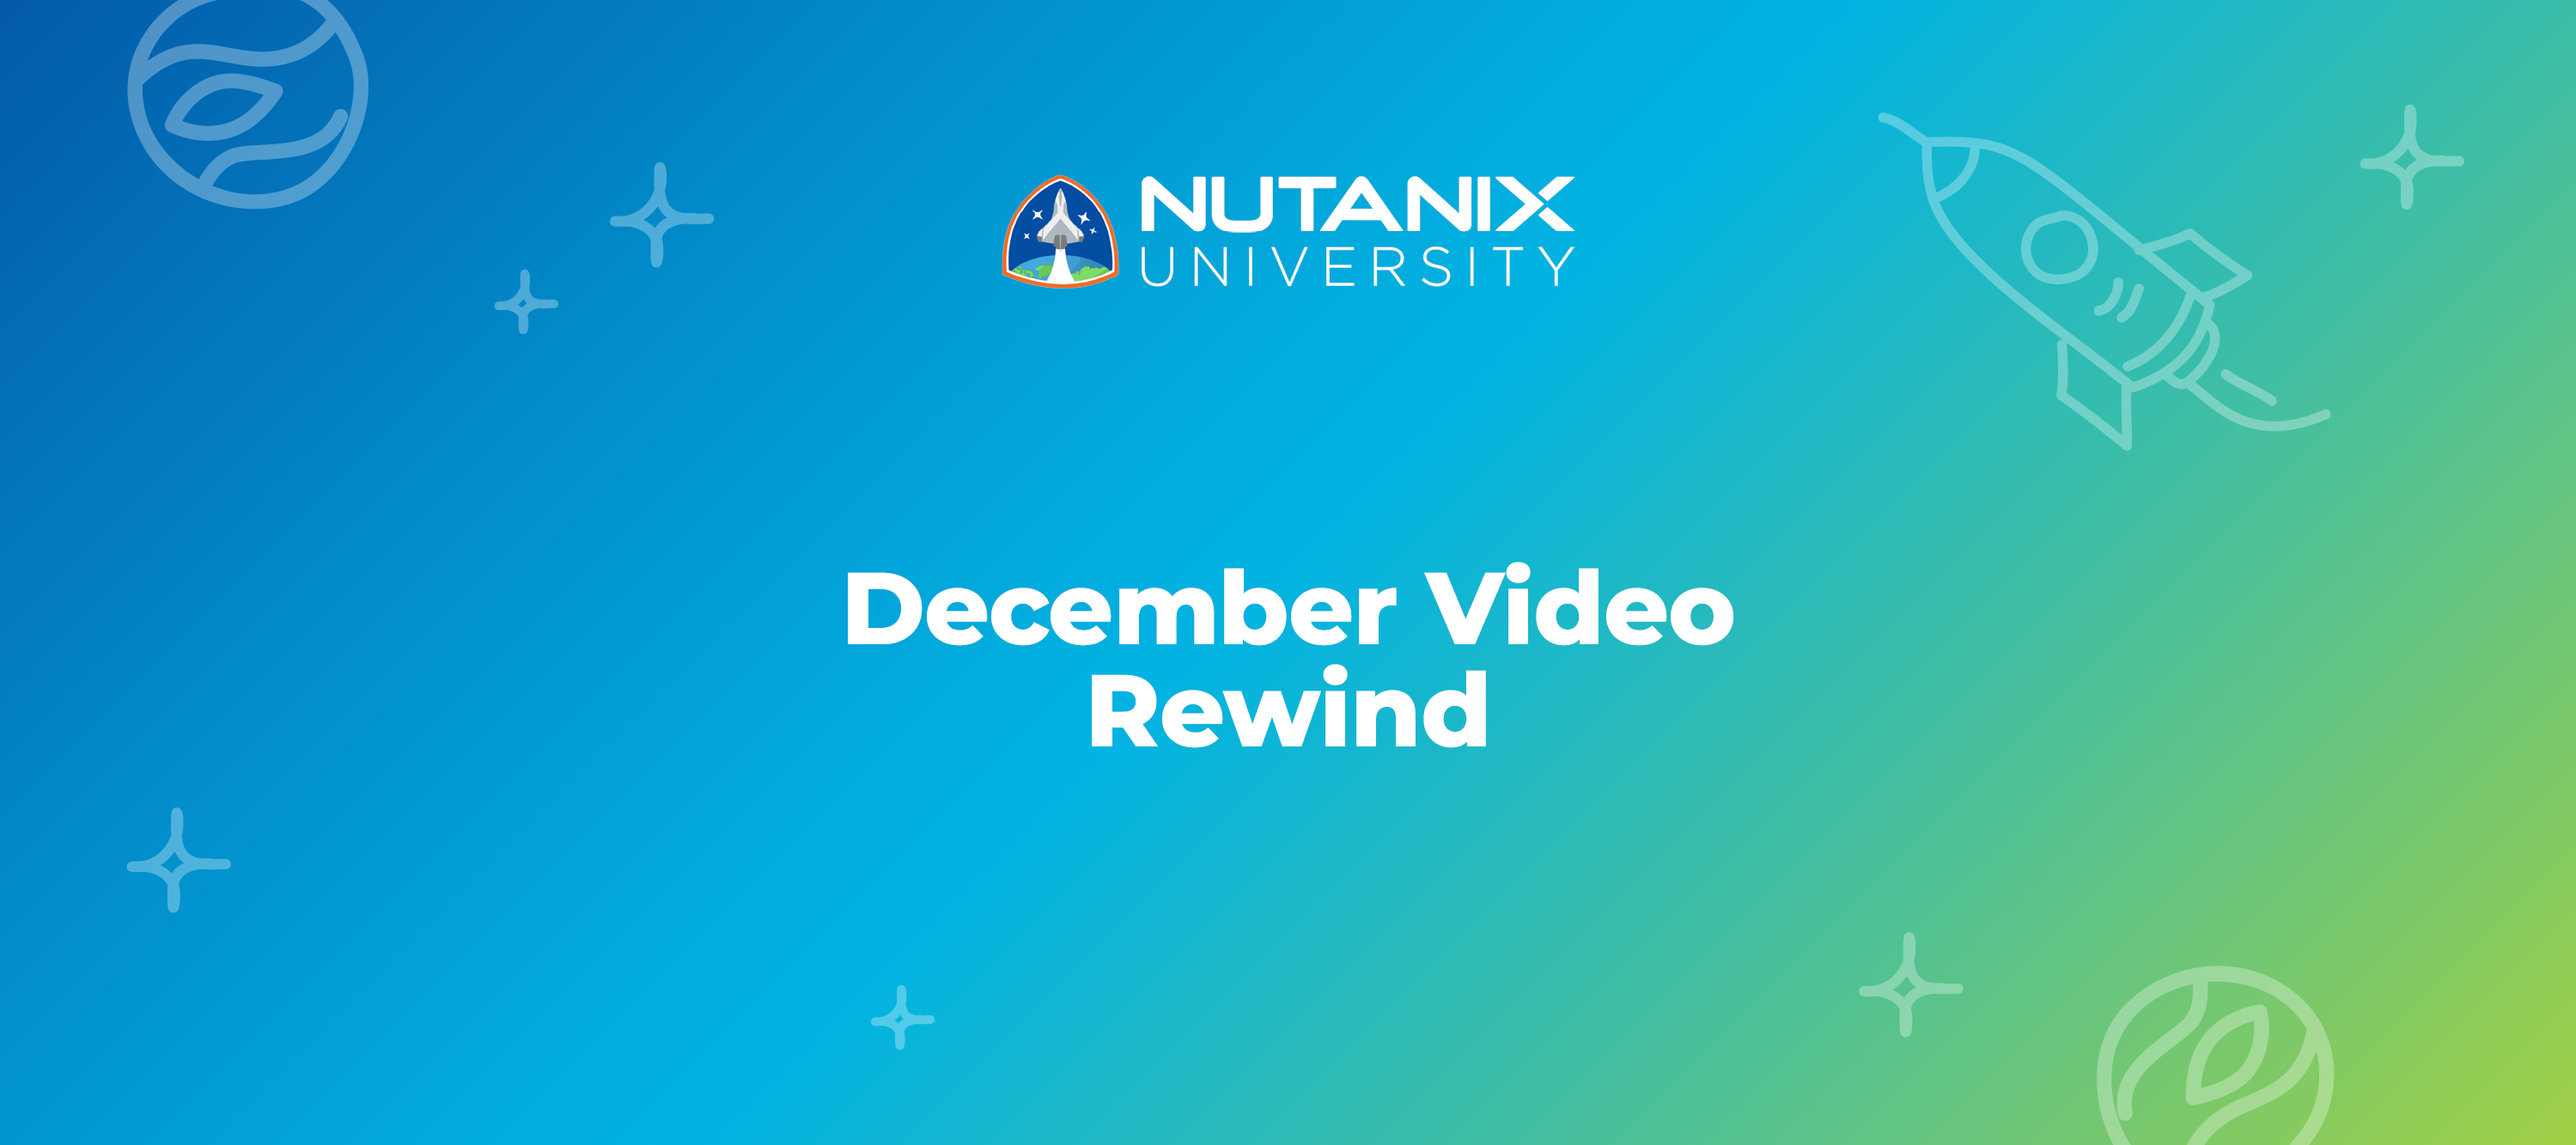 Nutanix University December Video Rewind